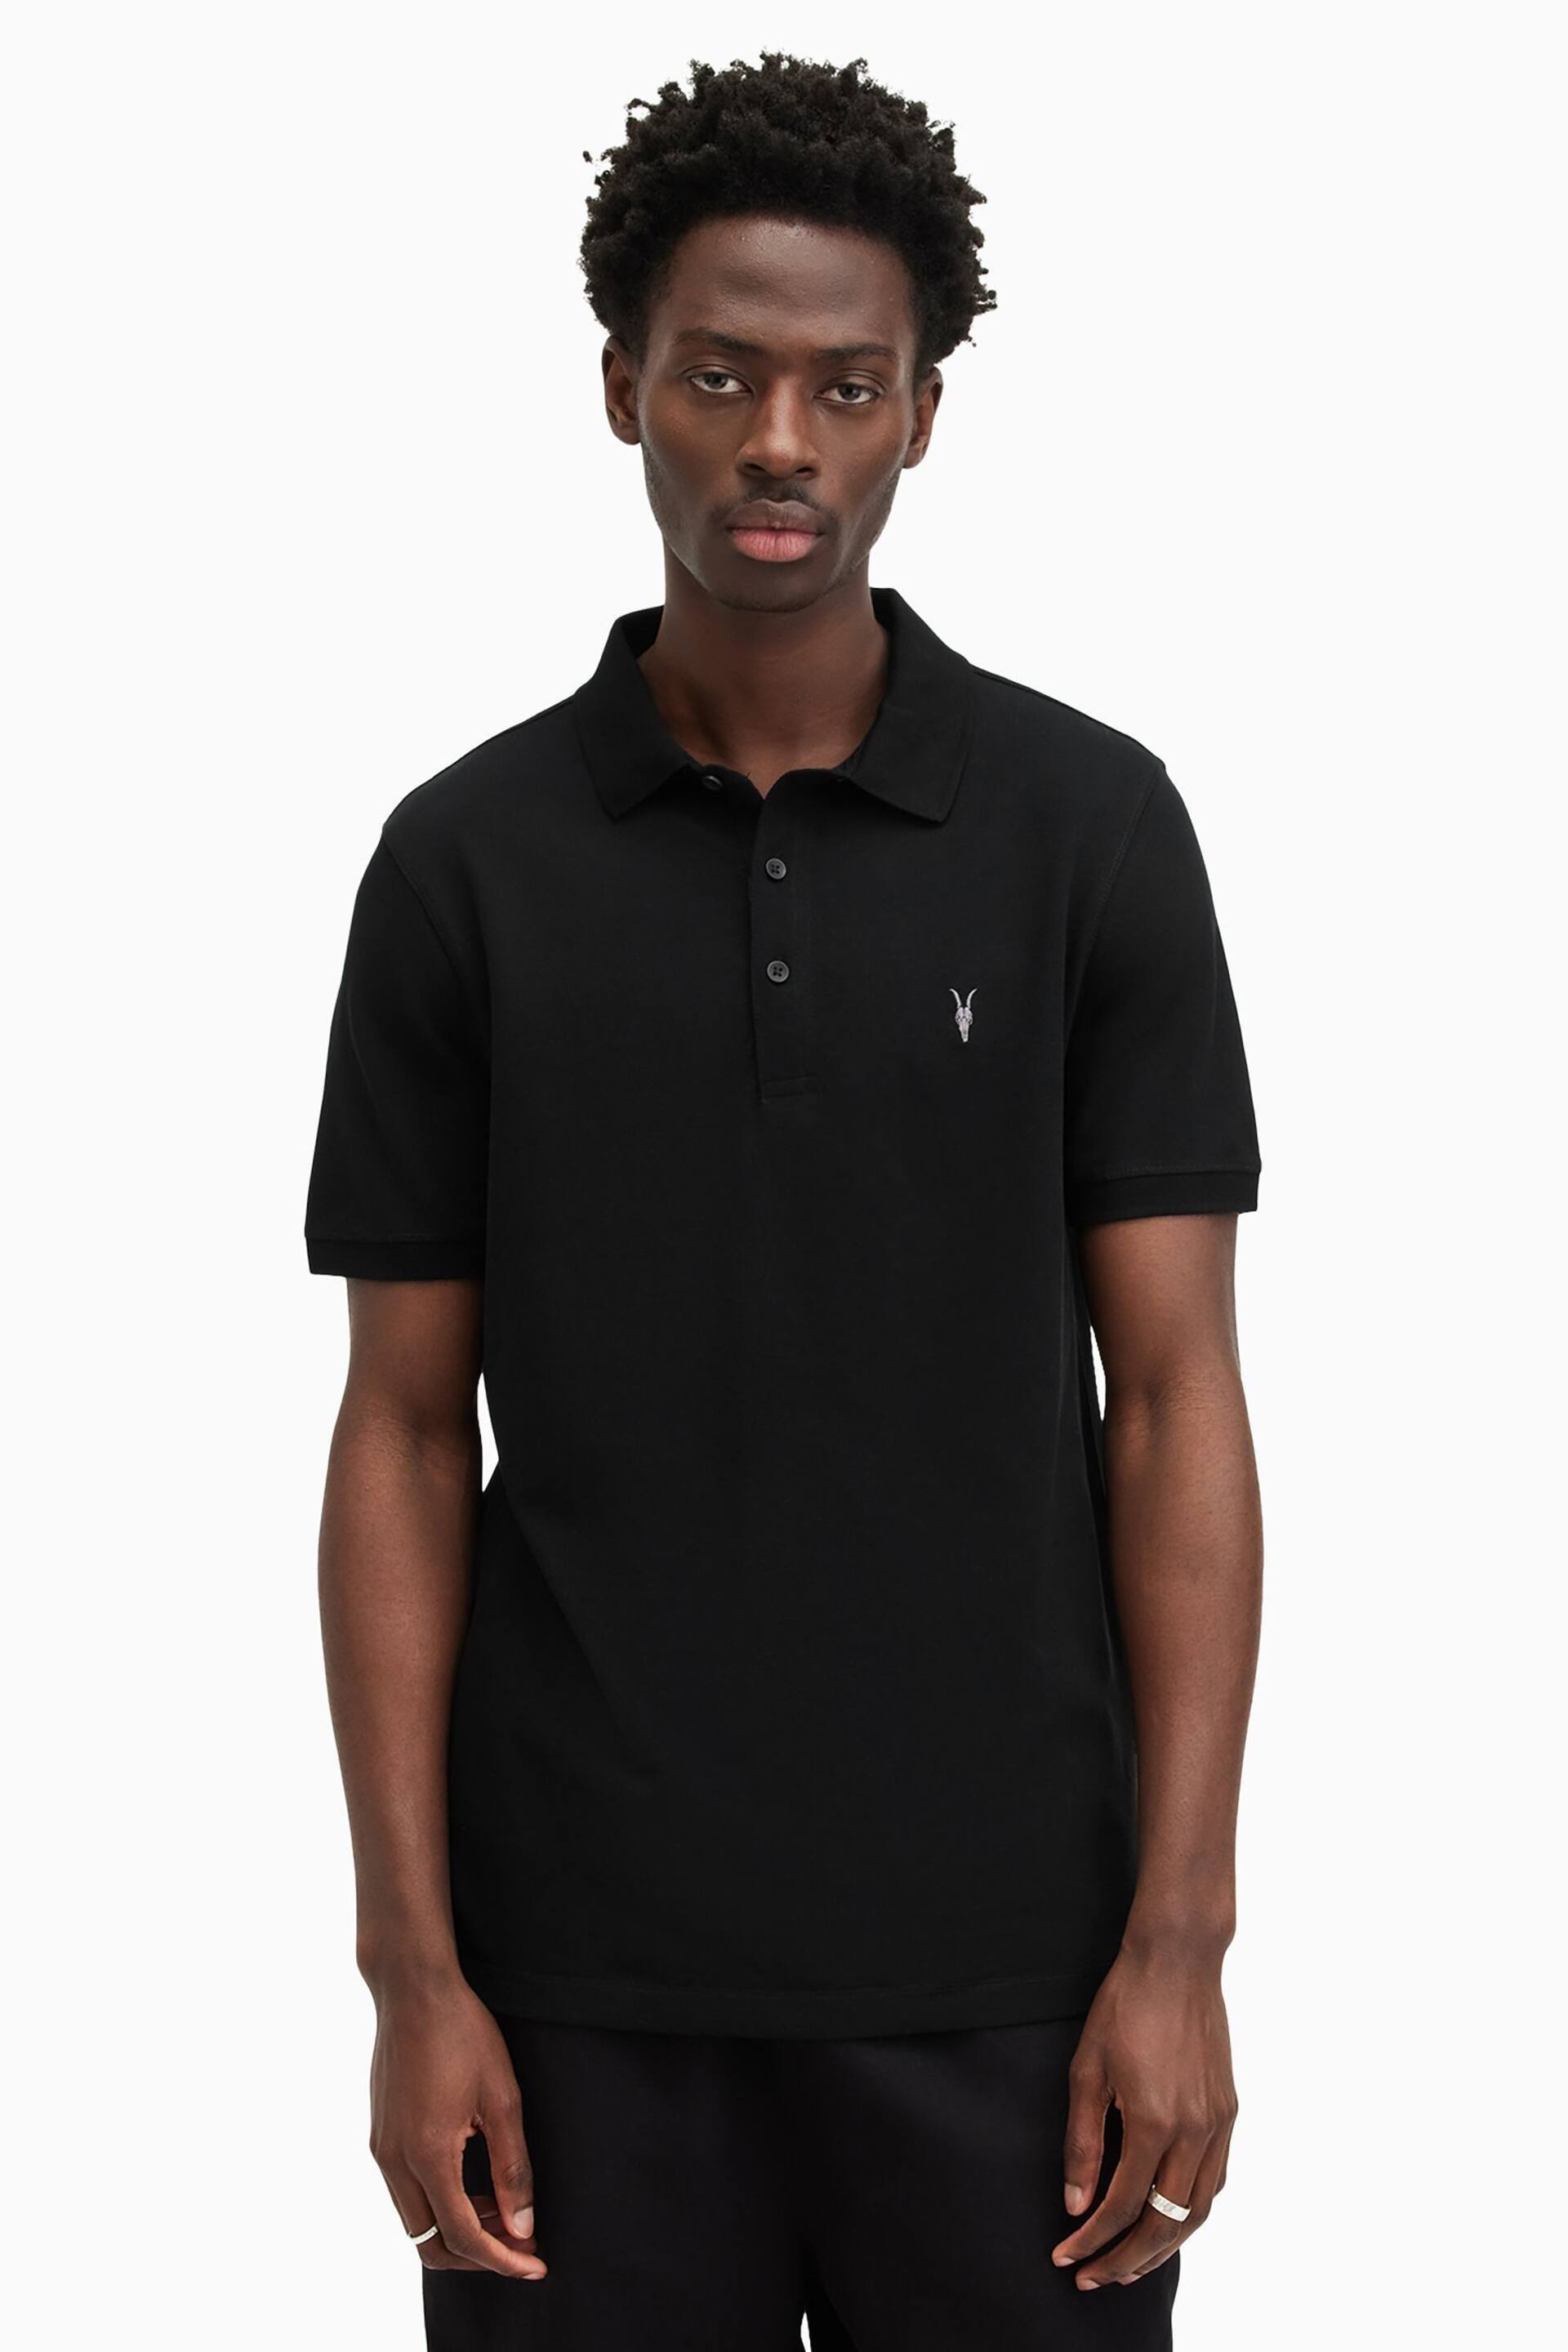 AllSaints Black Reform Short Sleeve Polo Shirt 2 Pack - Image 3 of 7